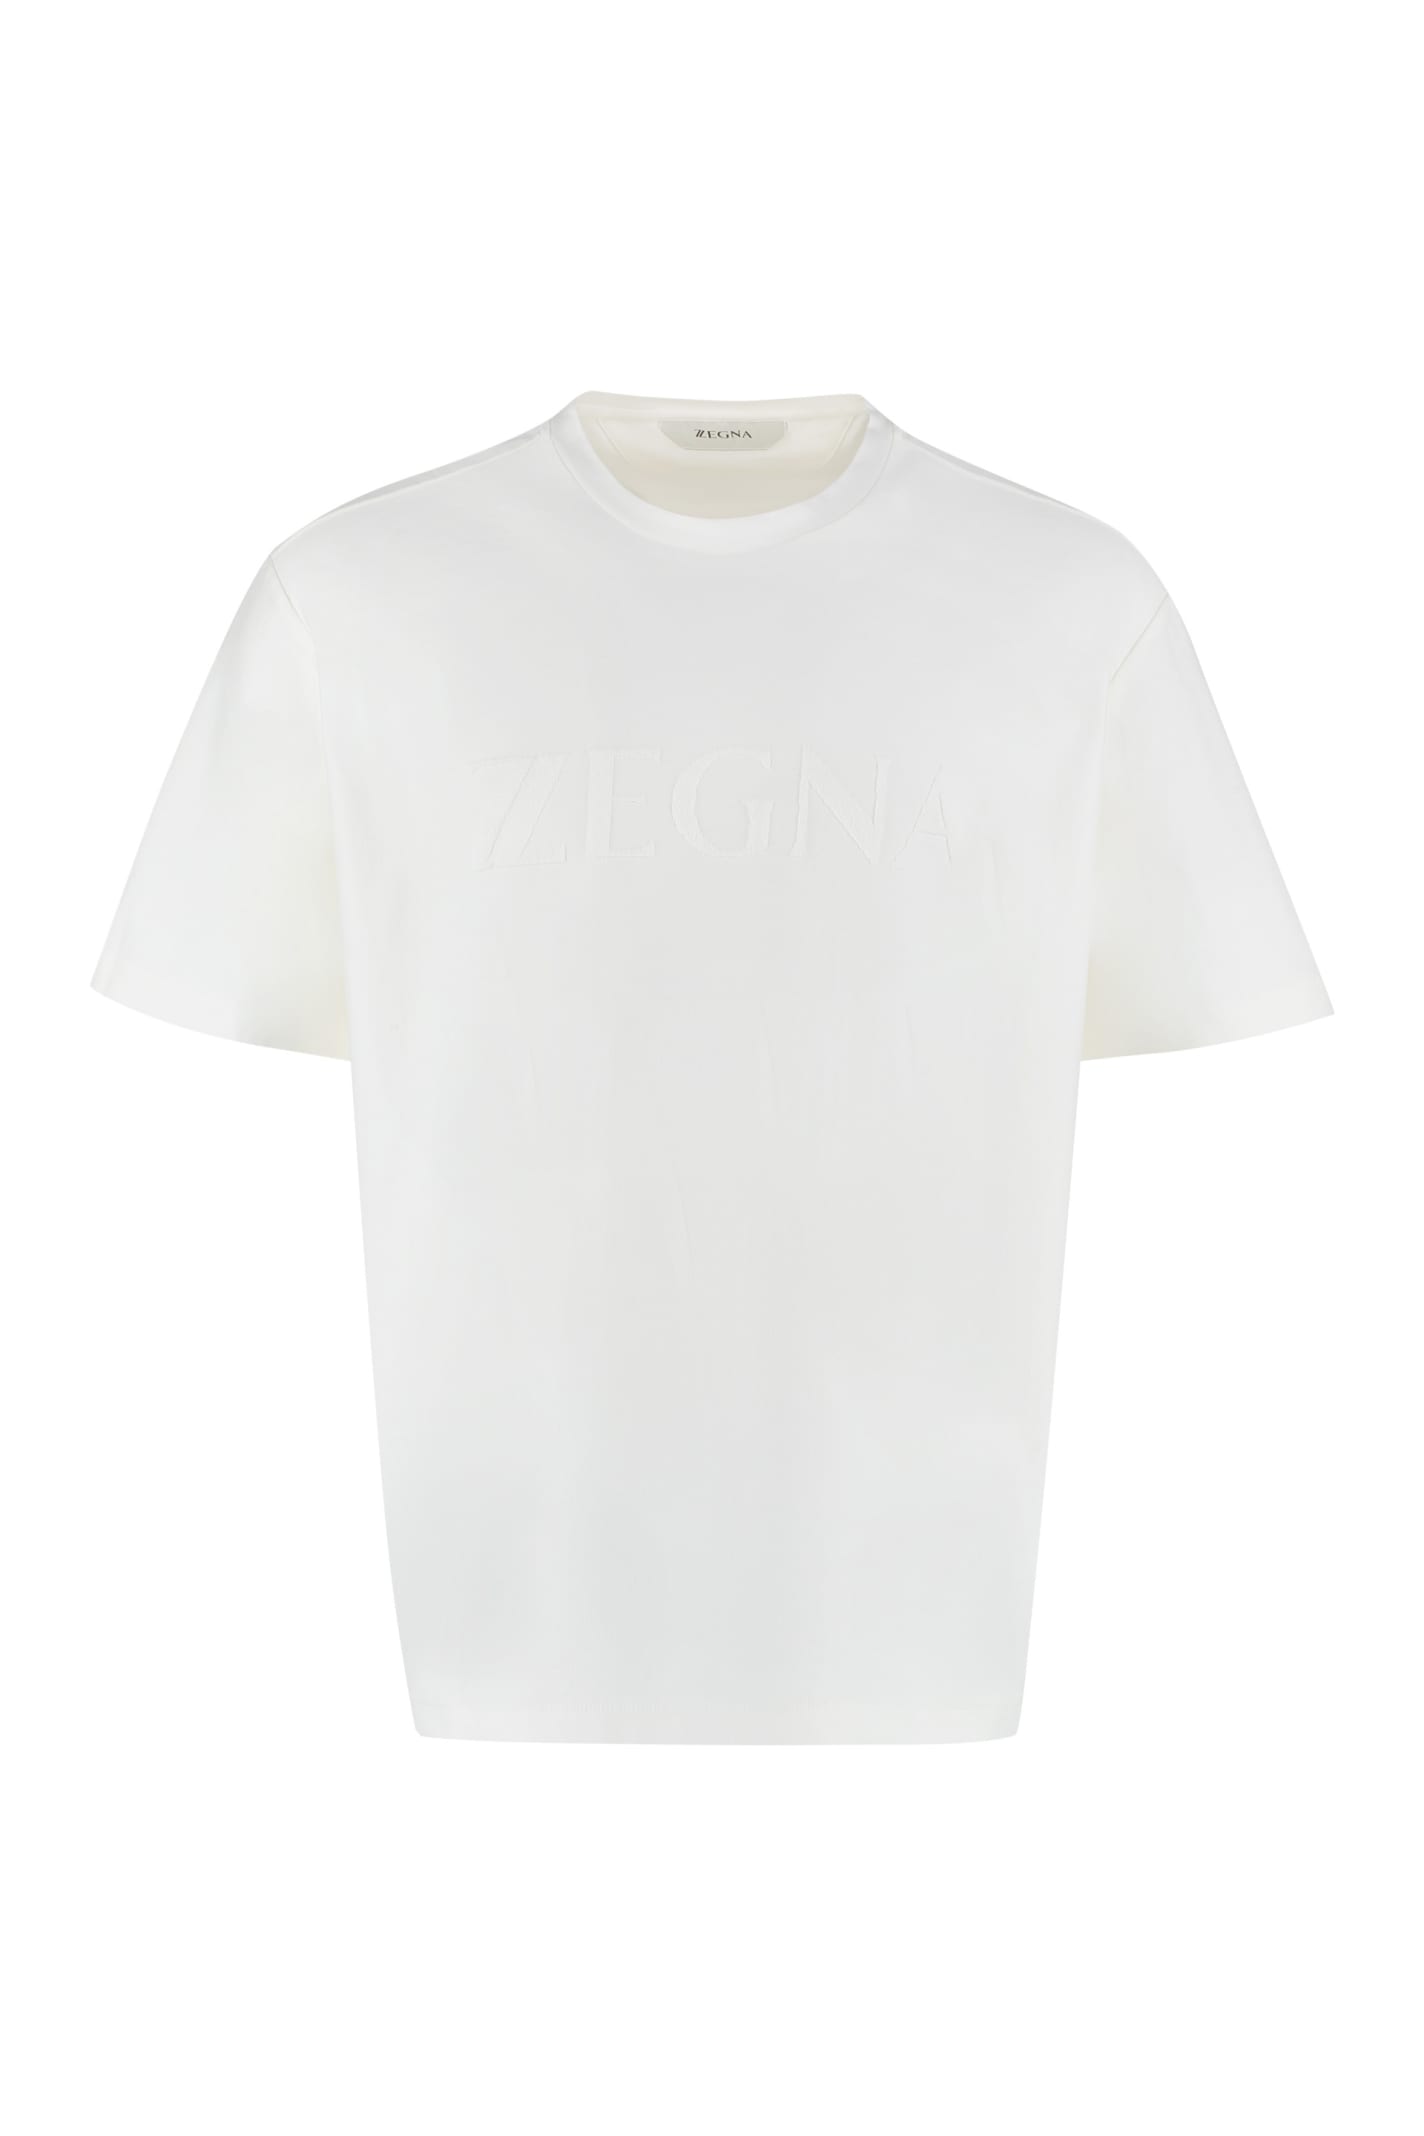 Z Zegna Logo Cotton T-shirt